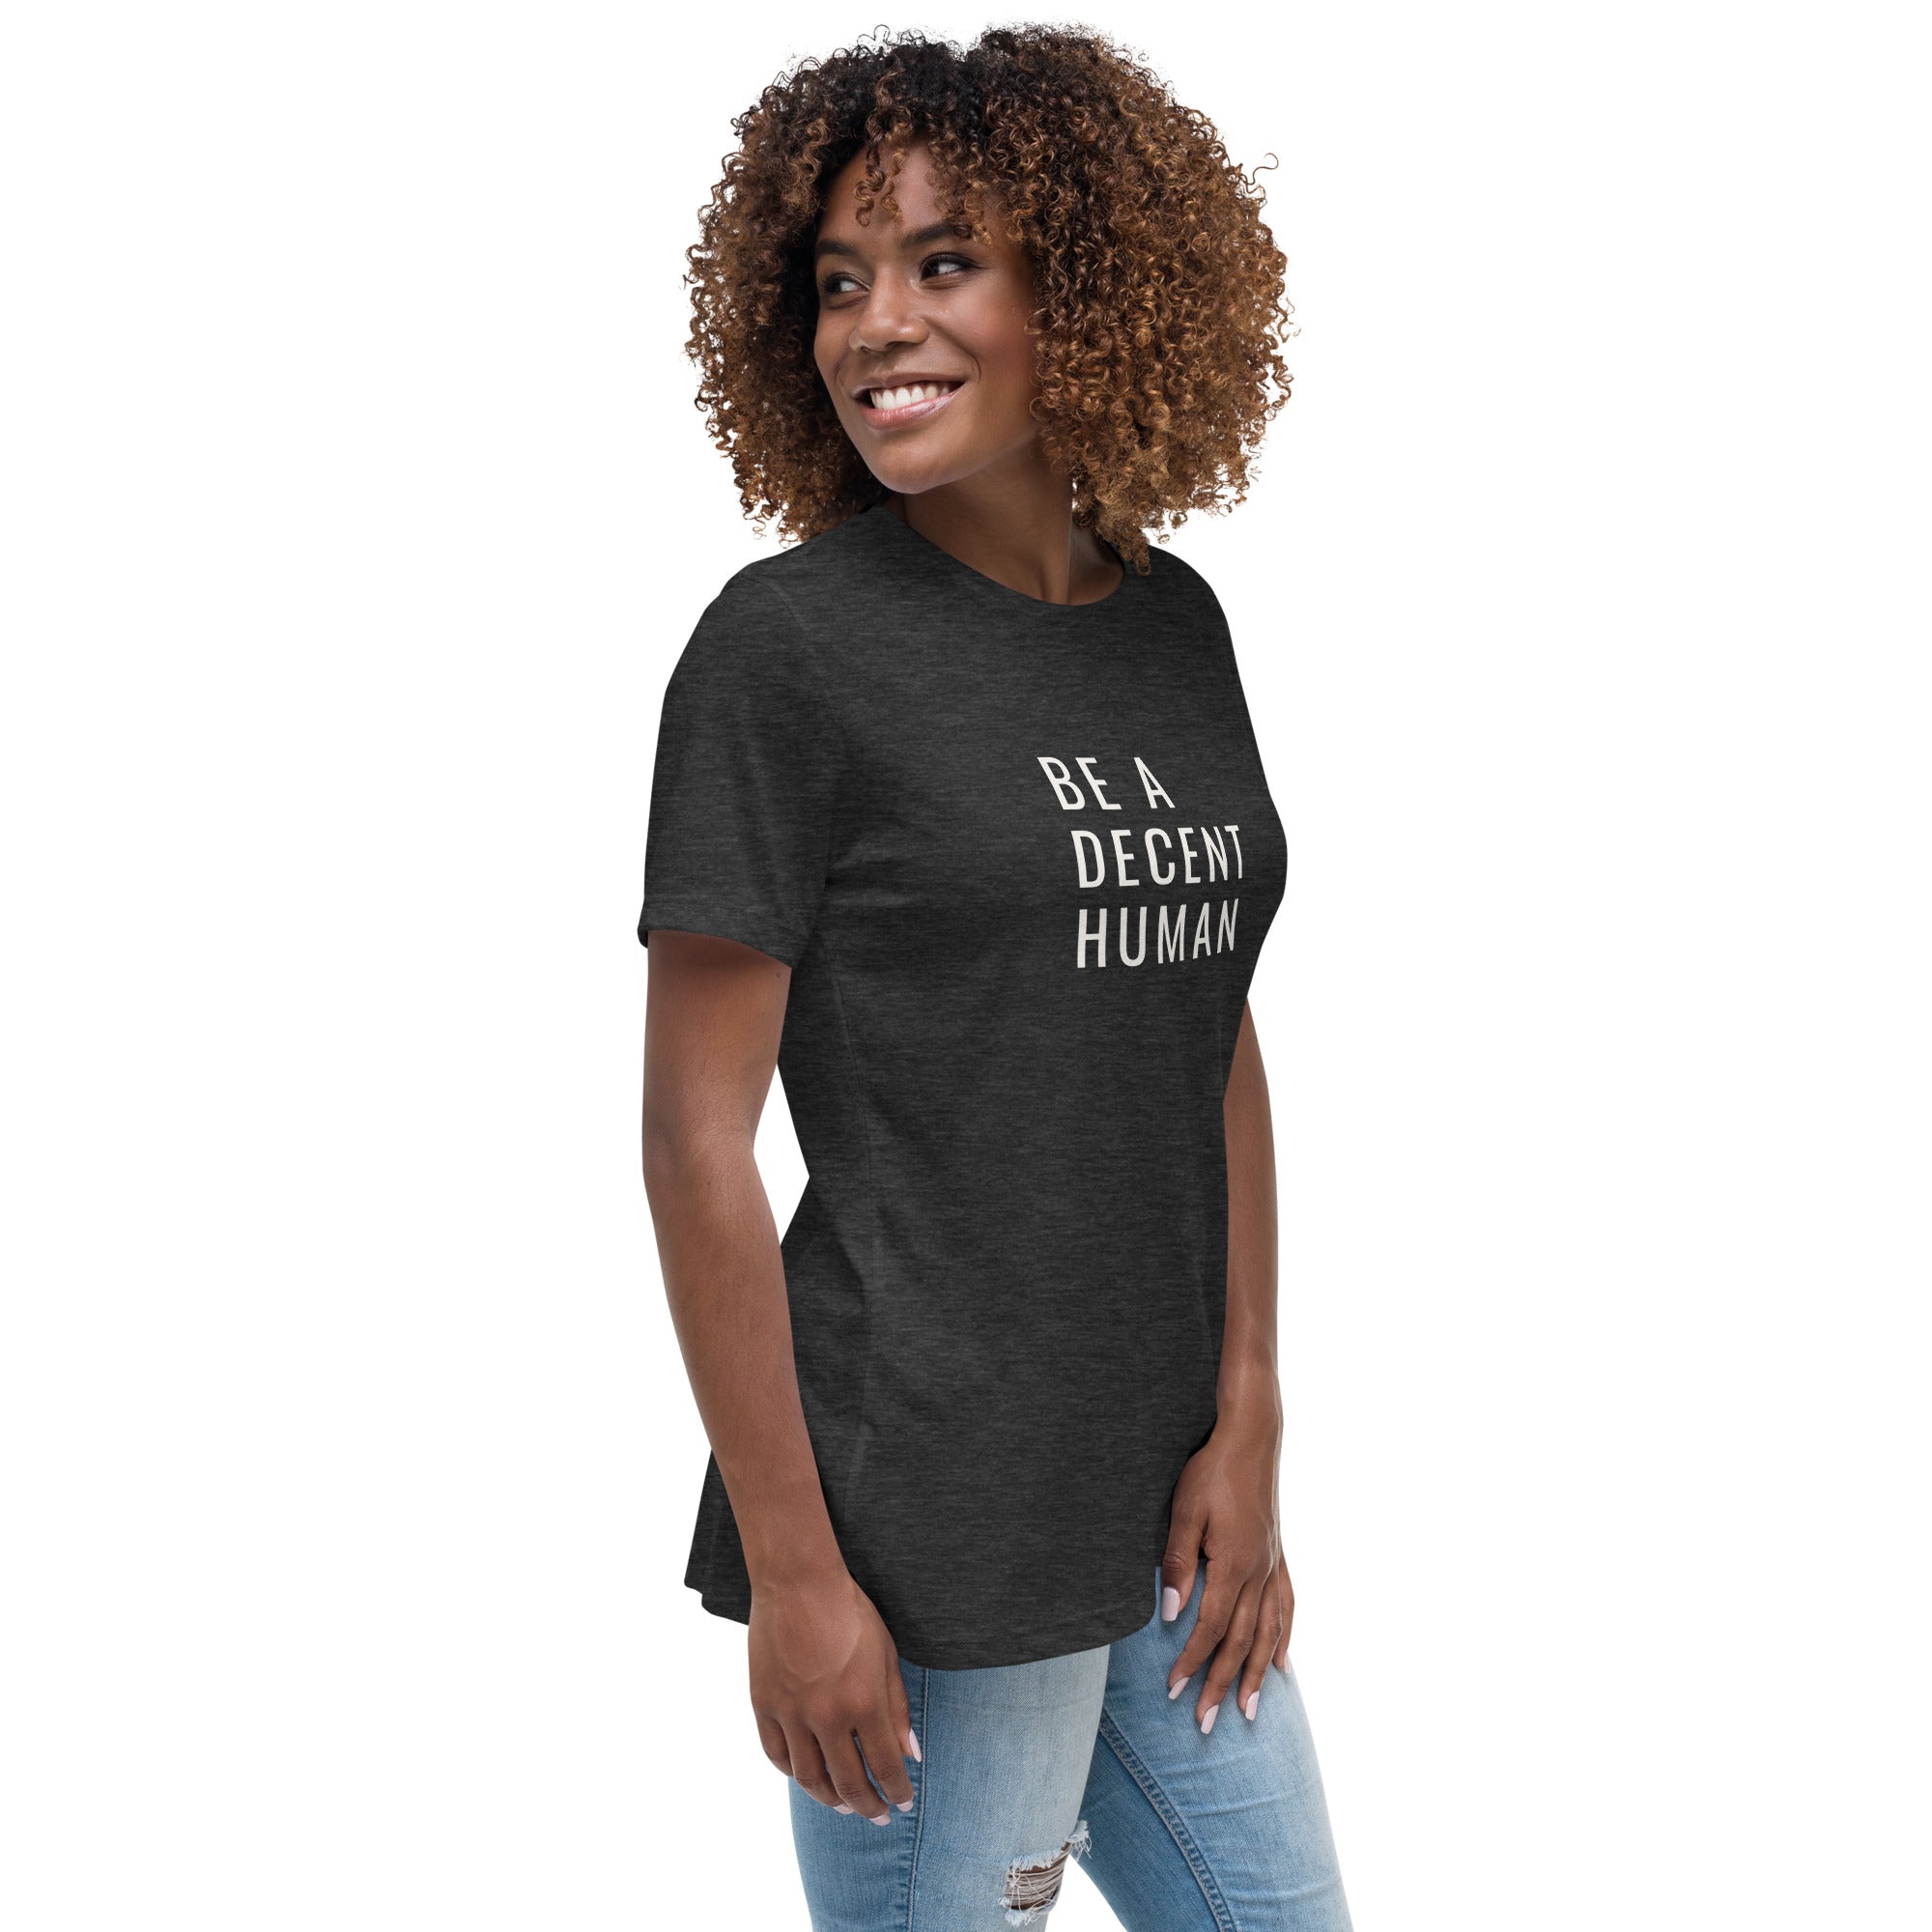 Be a Decent Human-Women's Relaxed T-Shirt – The 50's Chicks Shop